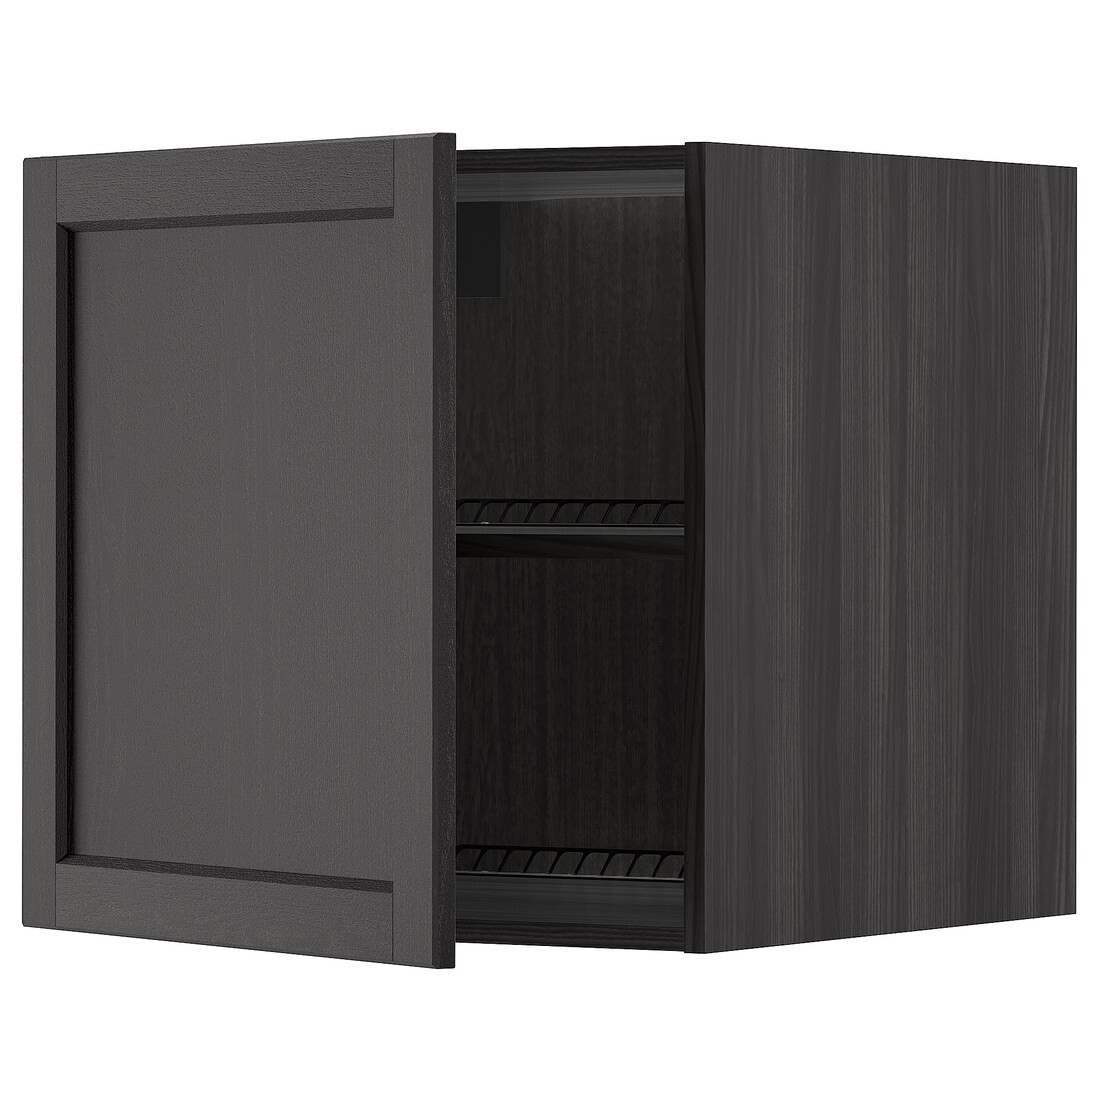 IKEA METOD МЕТОД Верхний шкаф для холодильника / морозильника, черный / Lerhyttan черная морилка, 60x60 см 09454708 | 094.547.08